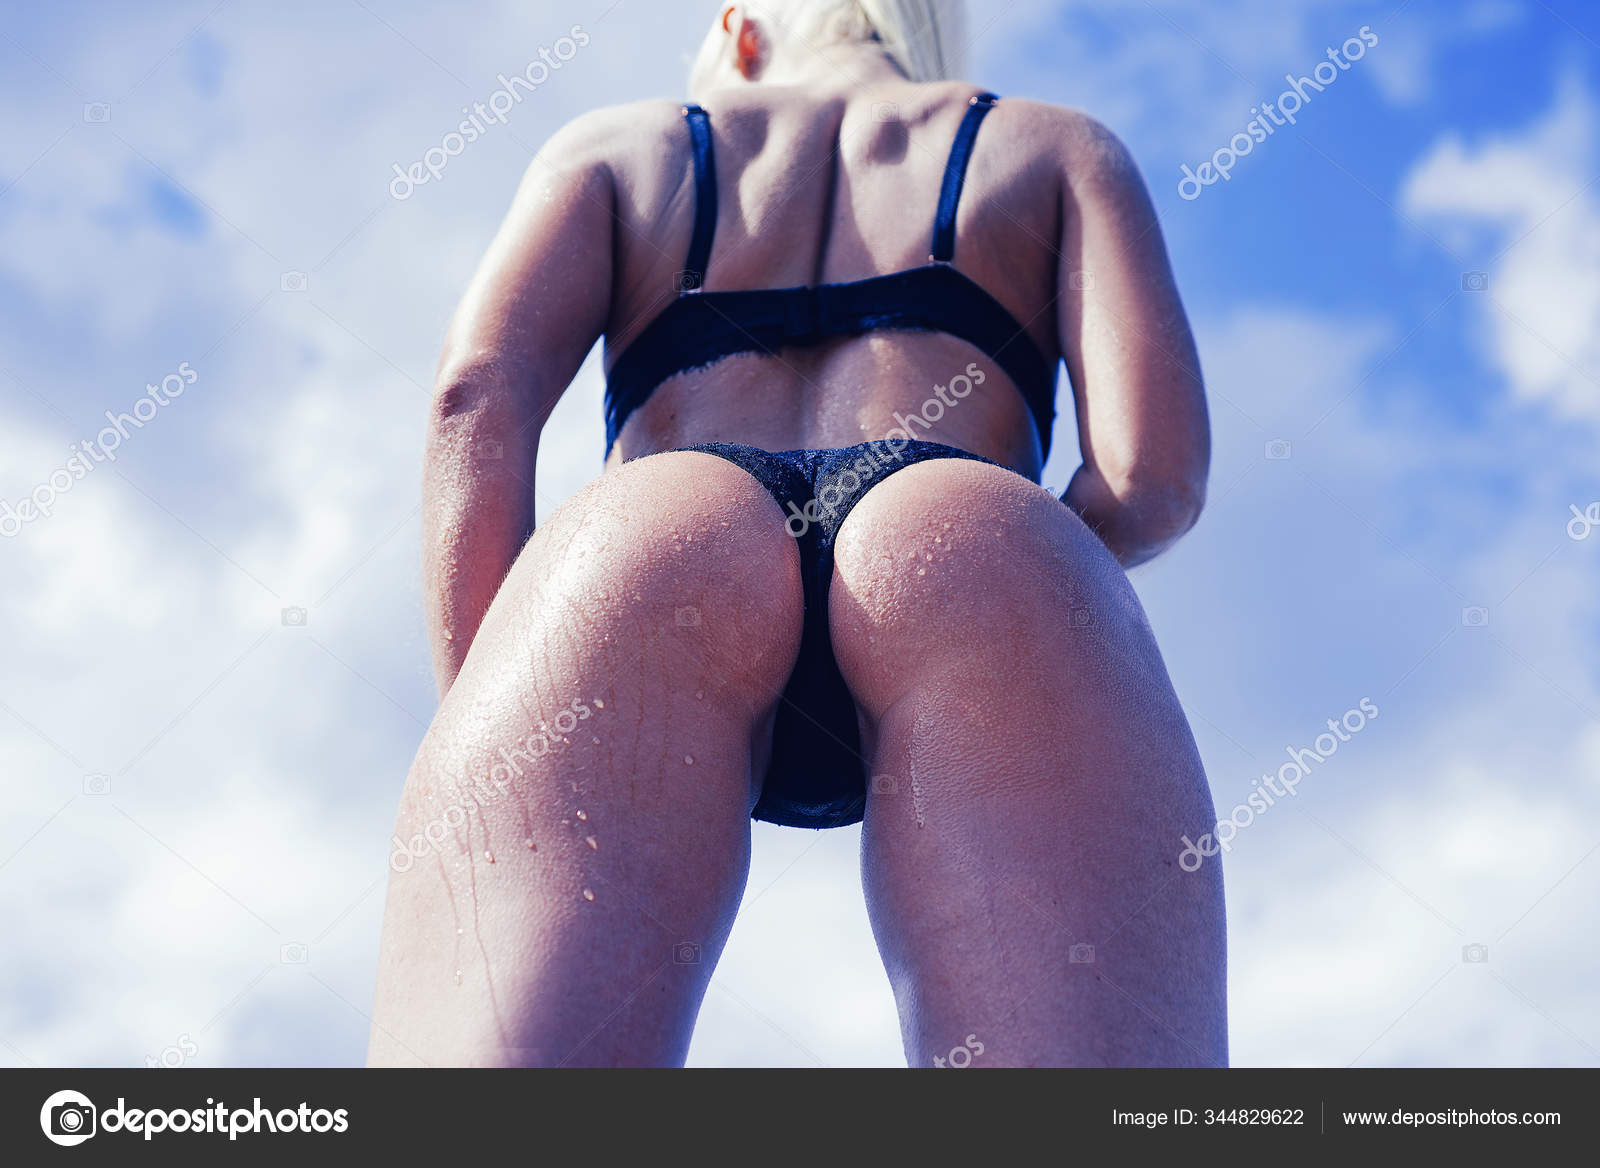 Beautiful tanned woman posing in bikini. Ideal woman anti-cellulite body and skin care. Sexy female ass in luxury panties